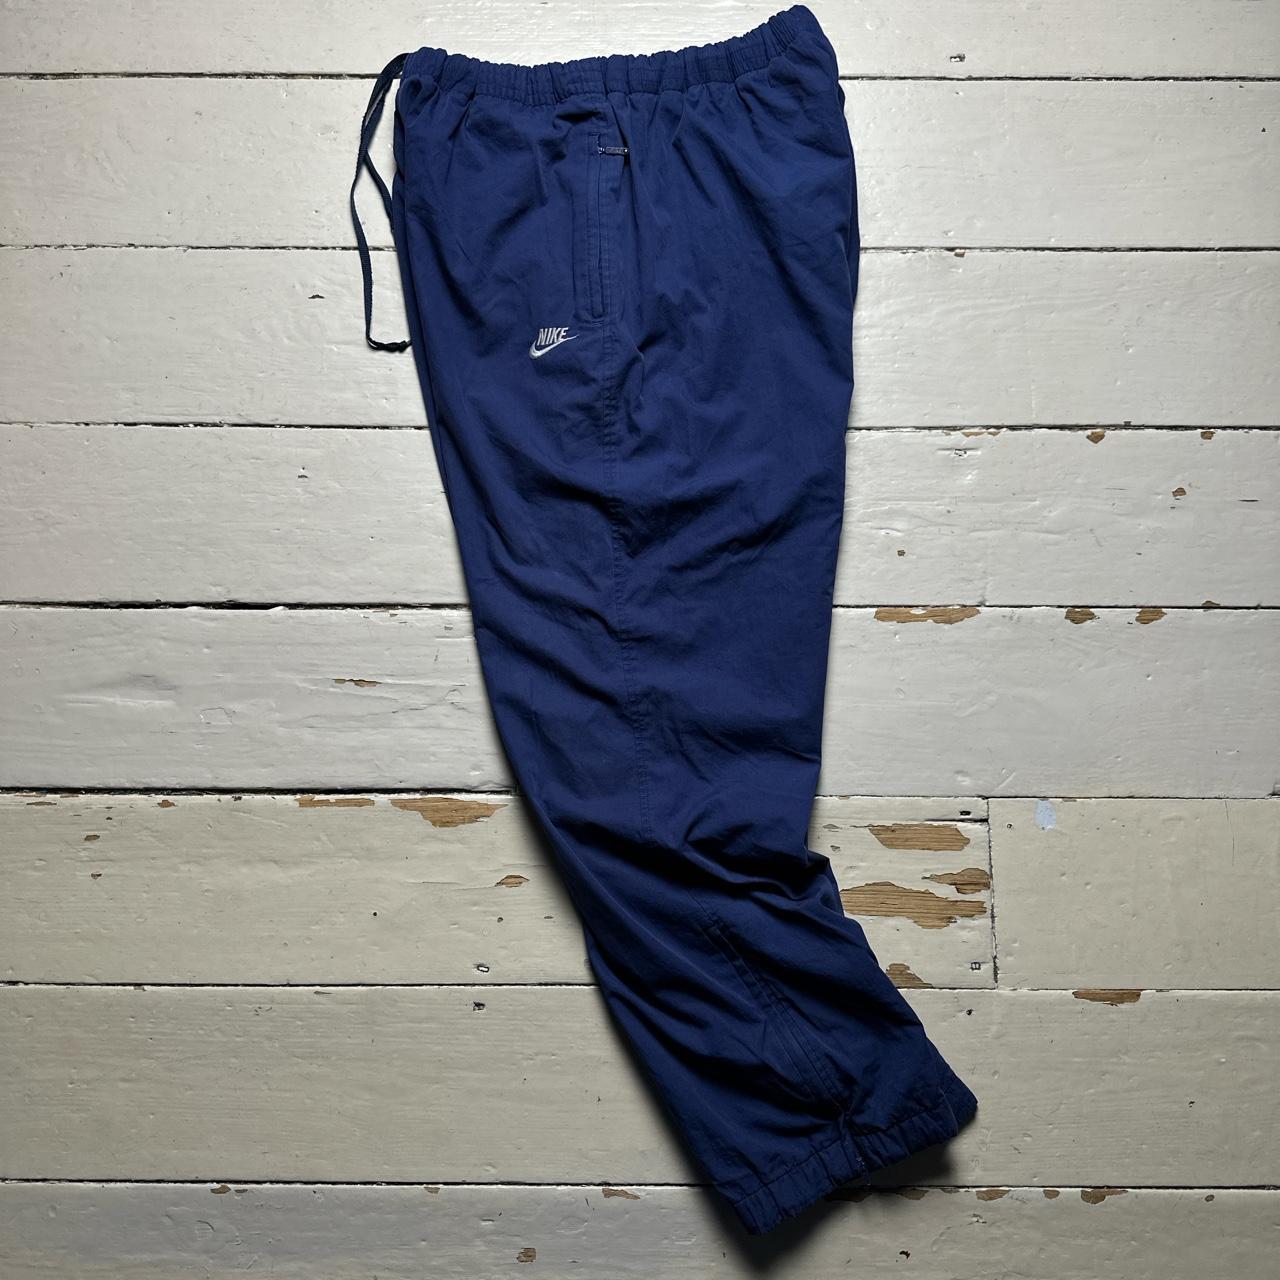 NIKE vintage dark blue shell pants